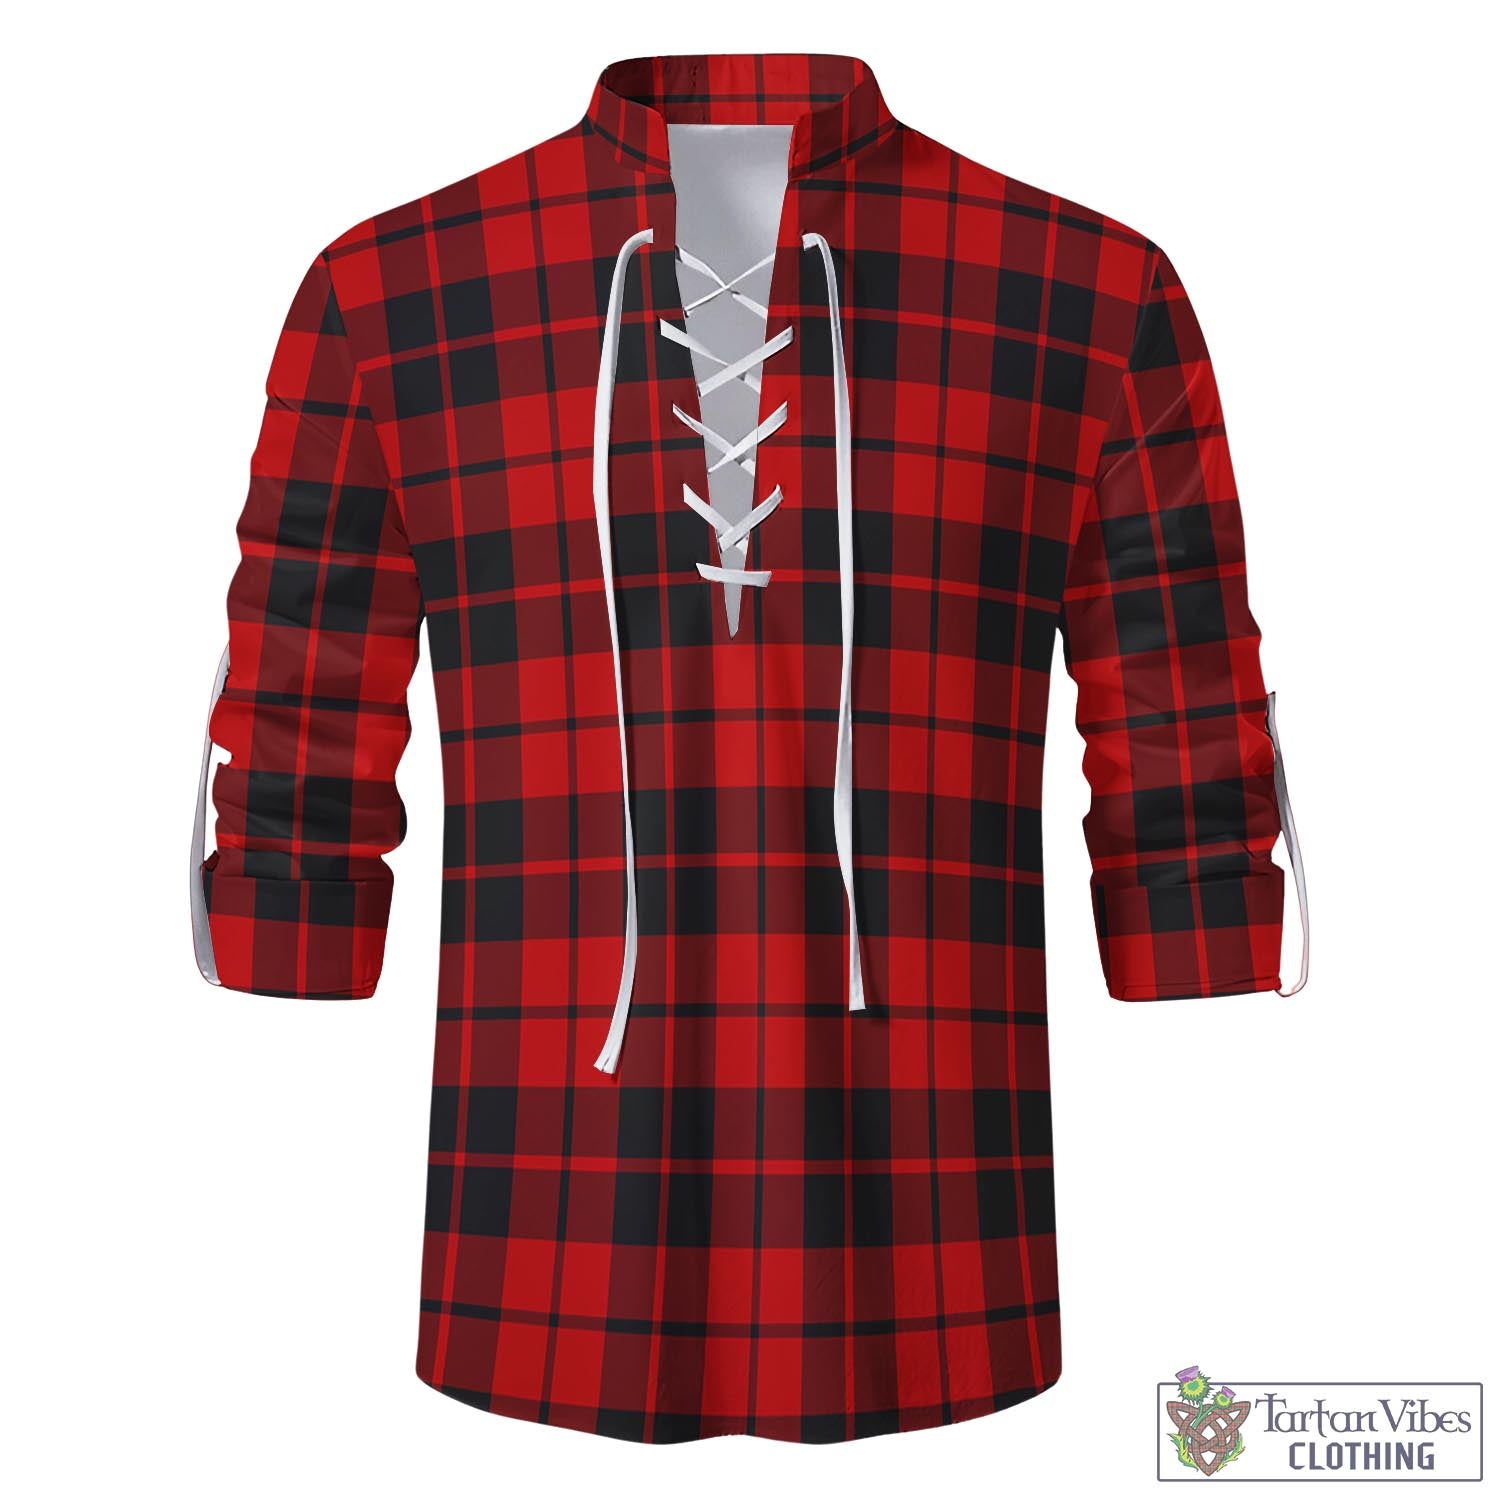 Tartan Vibes Clothing Hogg Tartan Men's Scottish Traditional Jacobite Ghillie Kilt Shirt